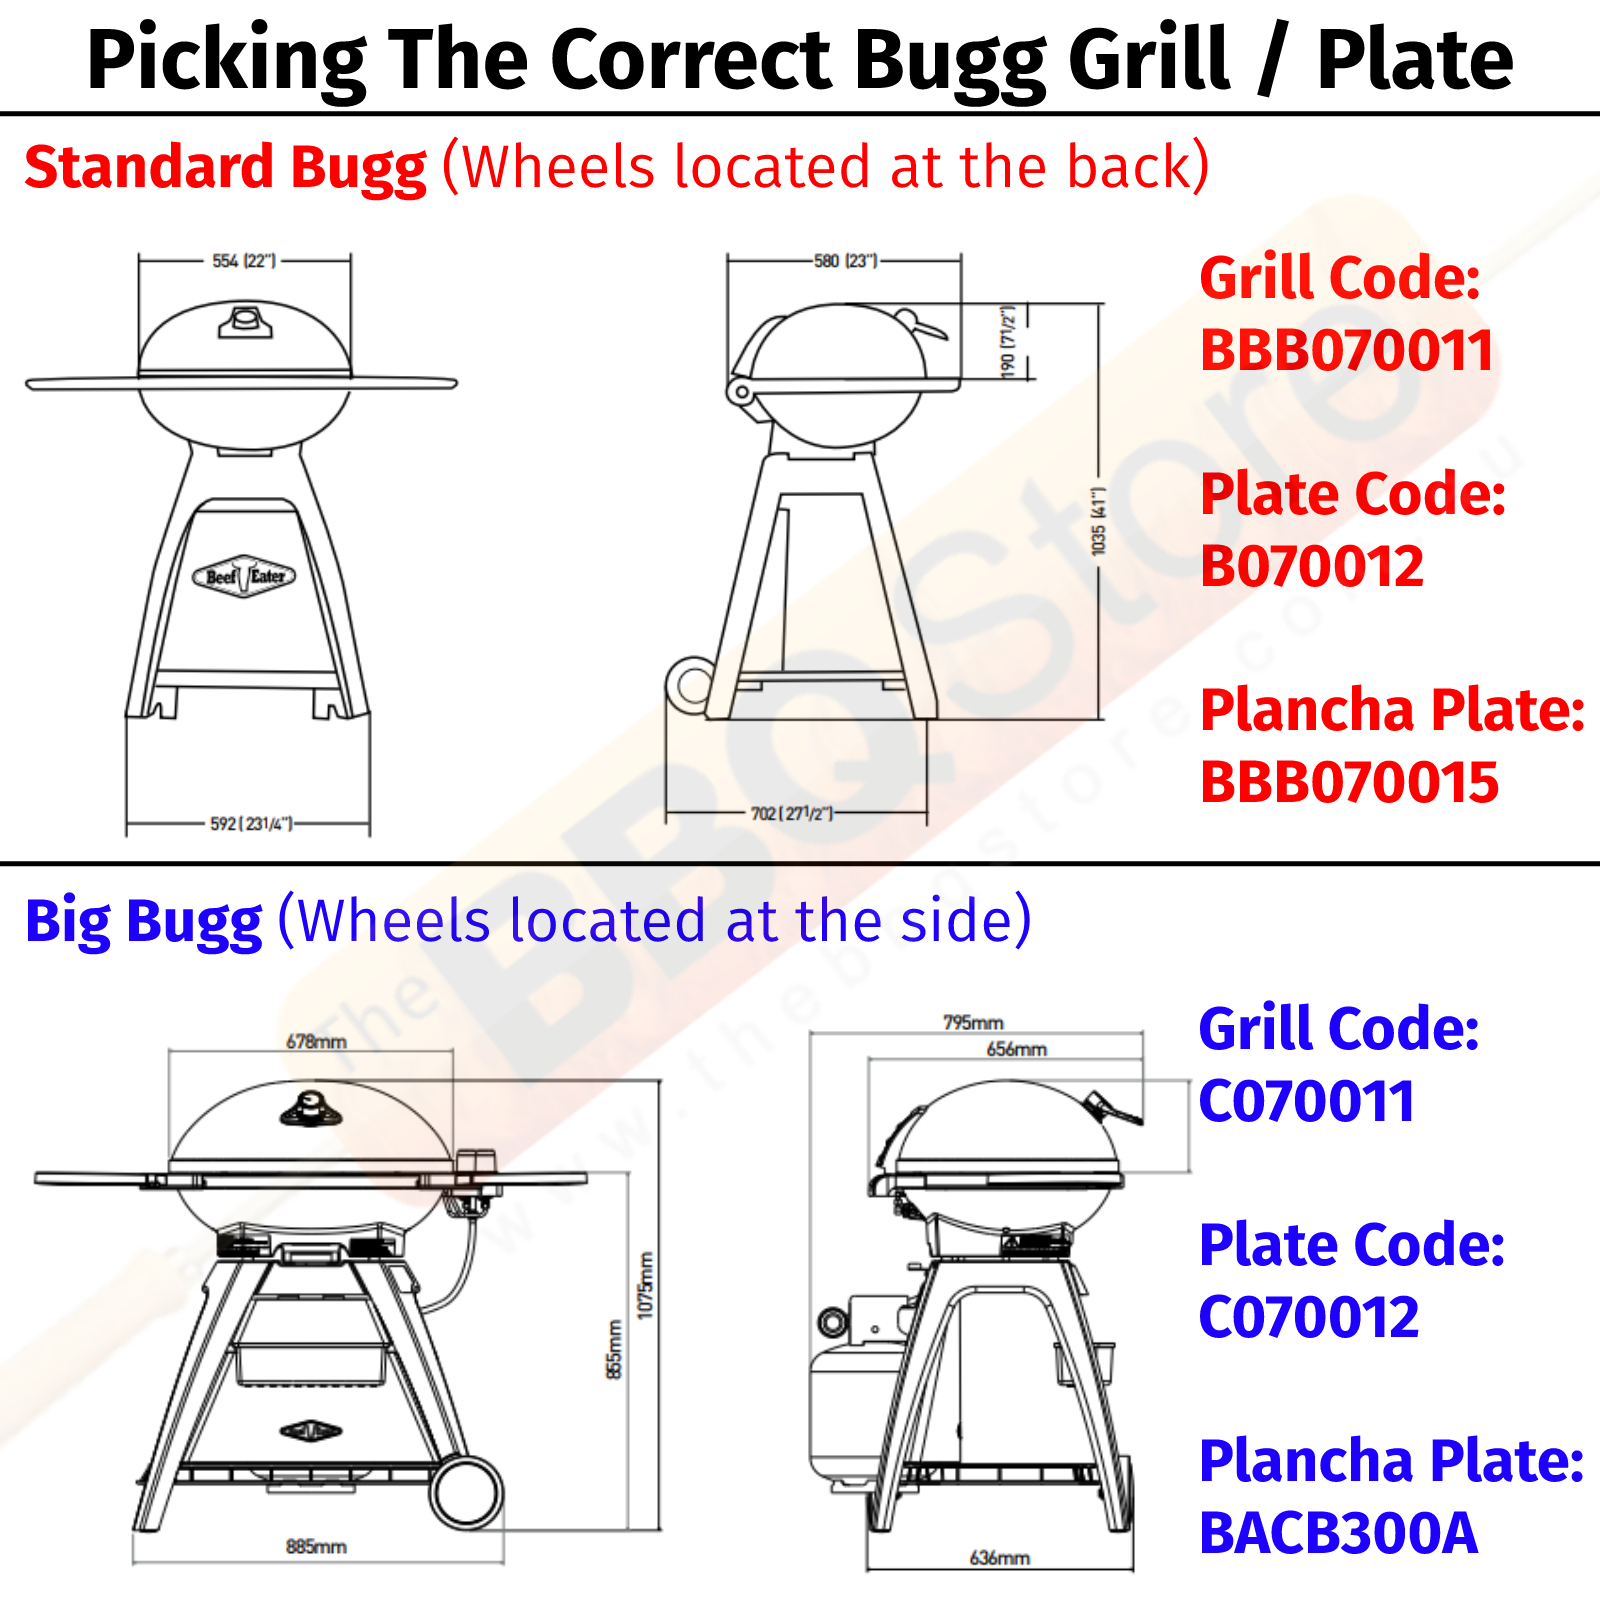  Beefeater BIGG BUGG plancha plate - BACB300A